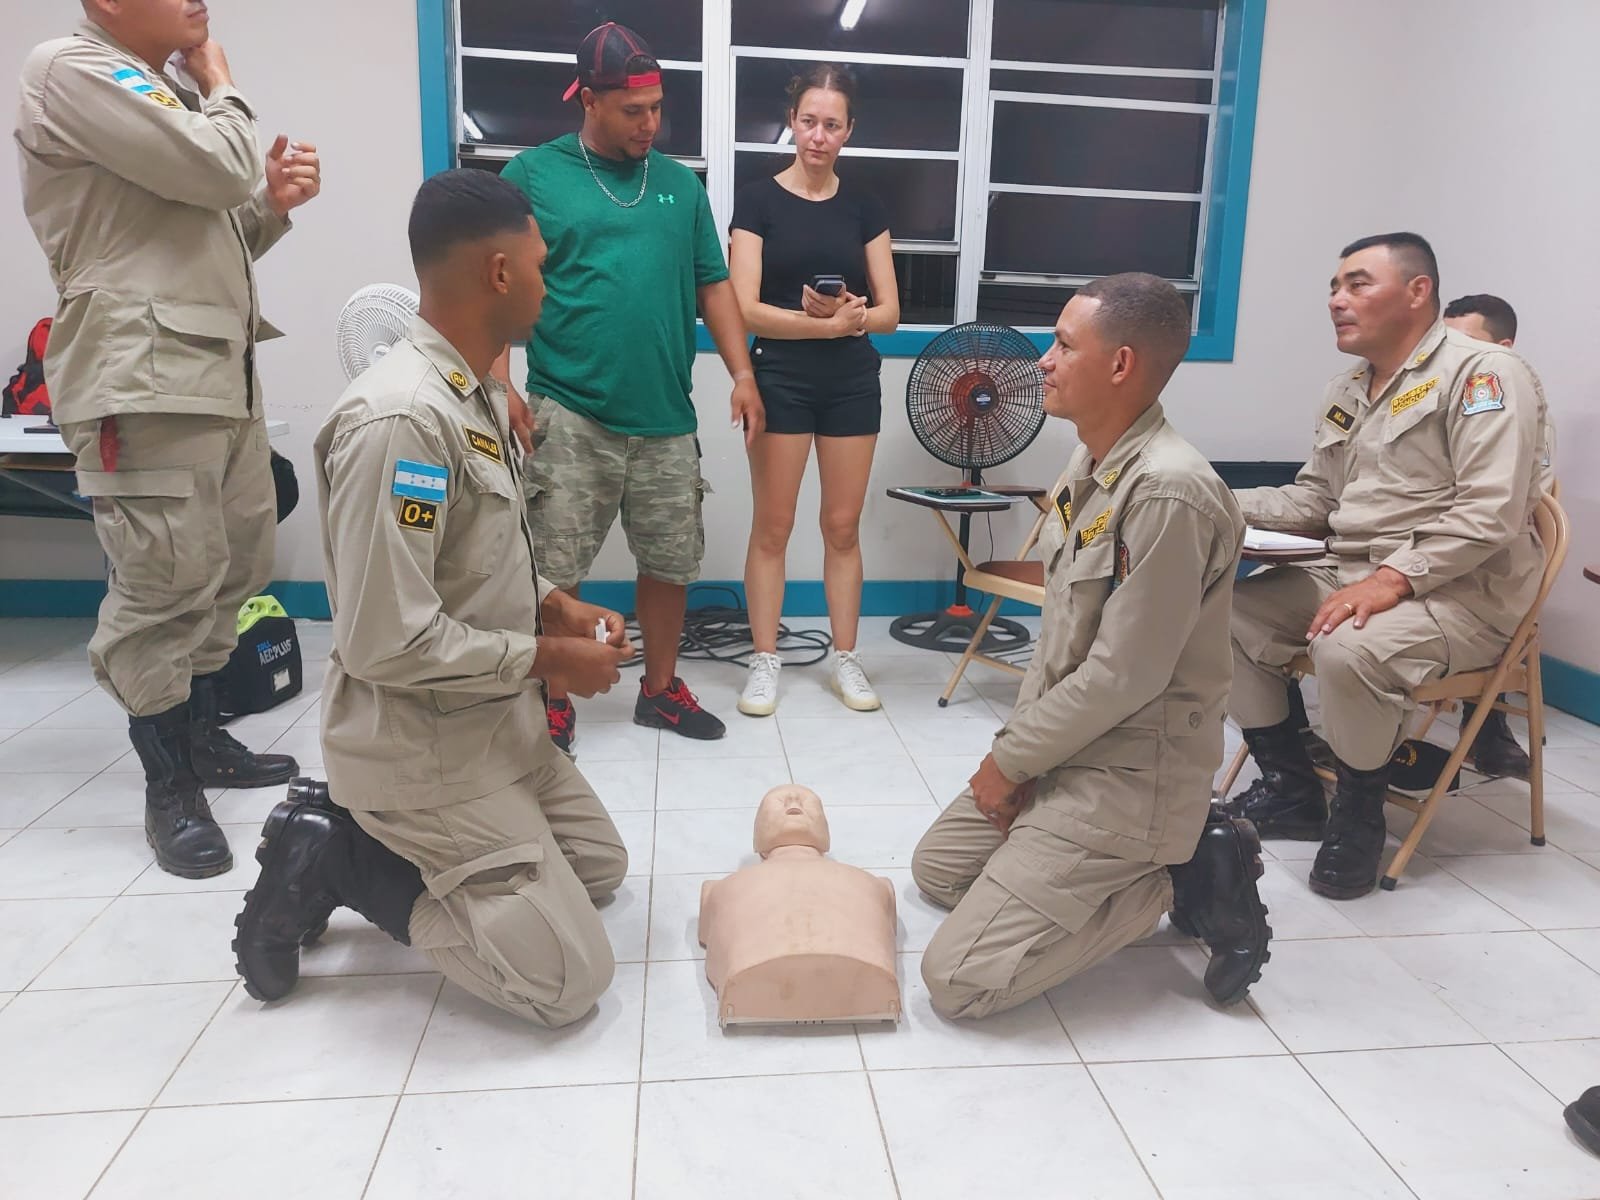 Island-Diving-Center-Emergency-First-Response-CPR-Training-Roatan-Fire-Department-31.jpg